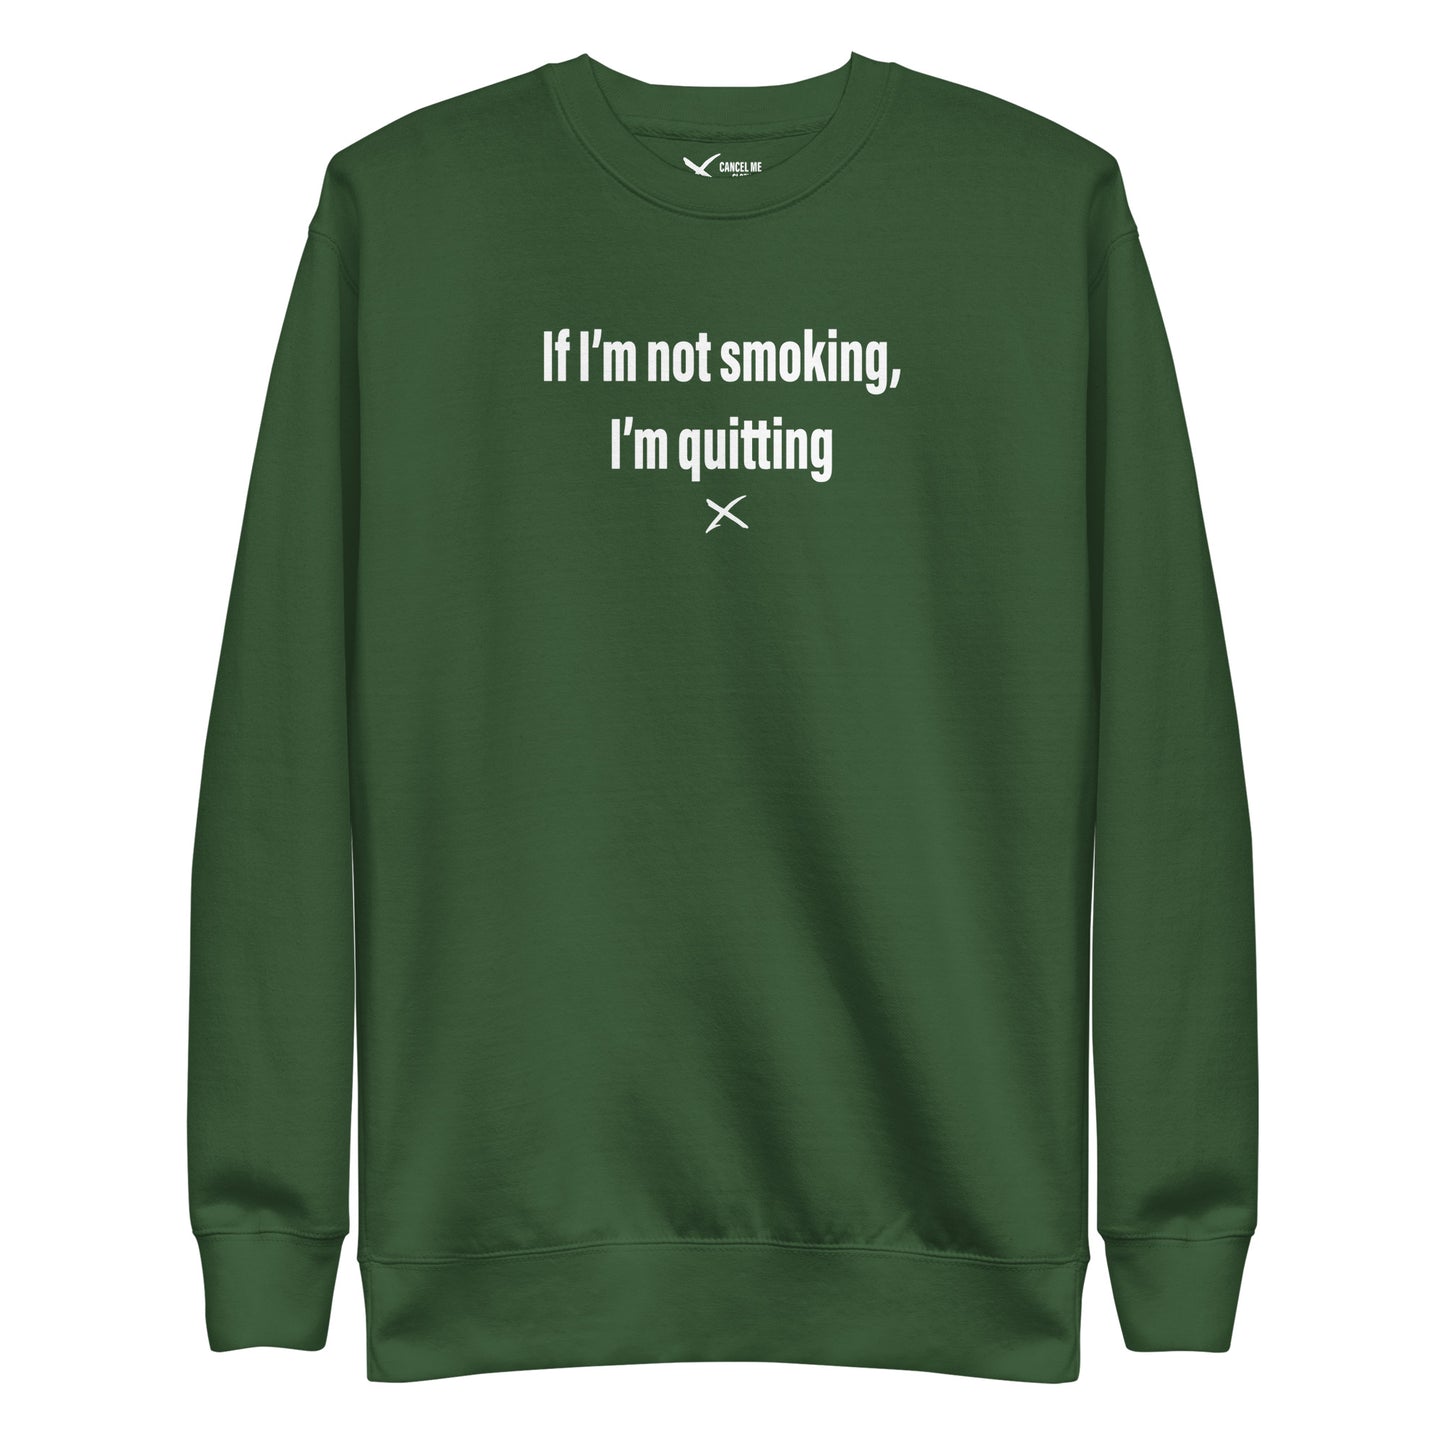 If I'm not smoking, I'm quitting - Sweatshirt